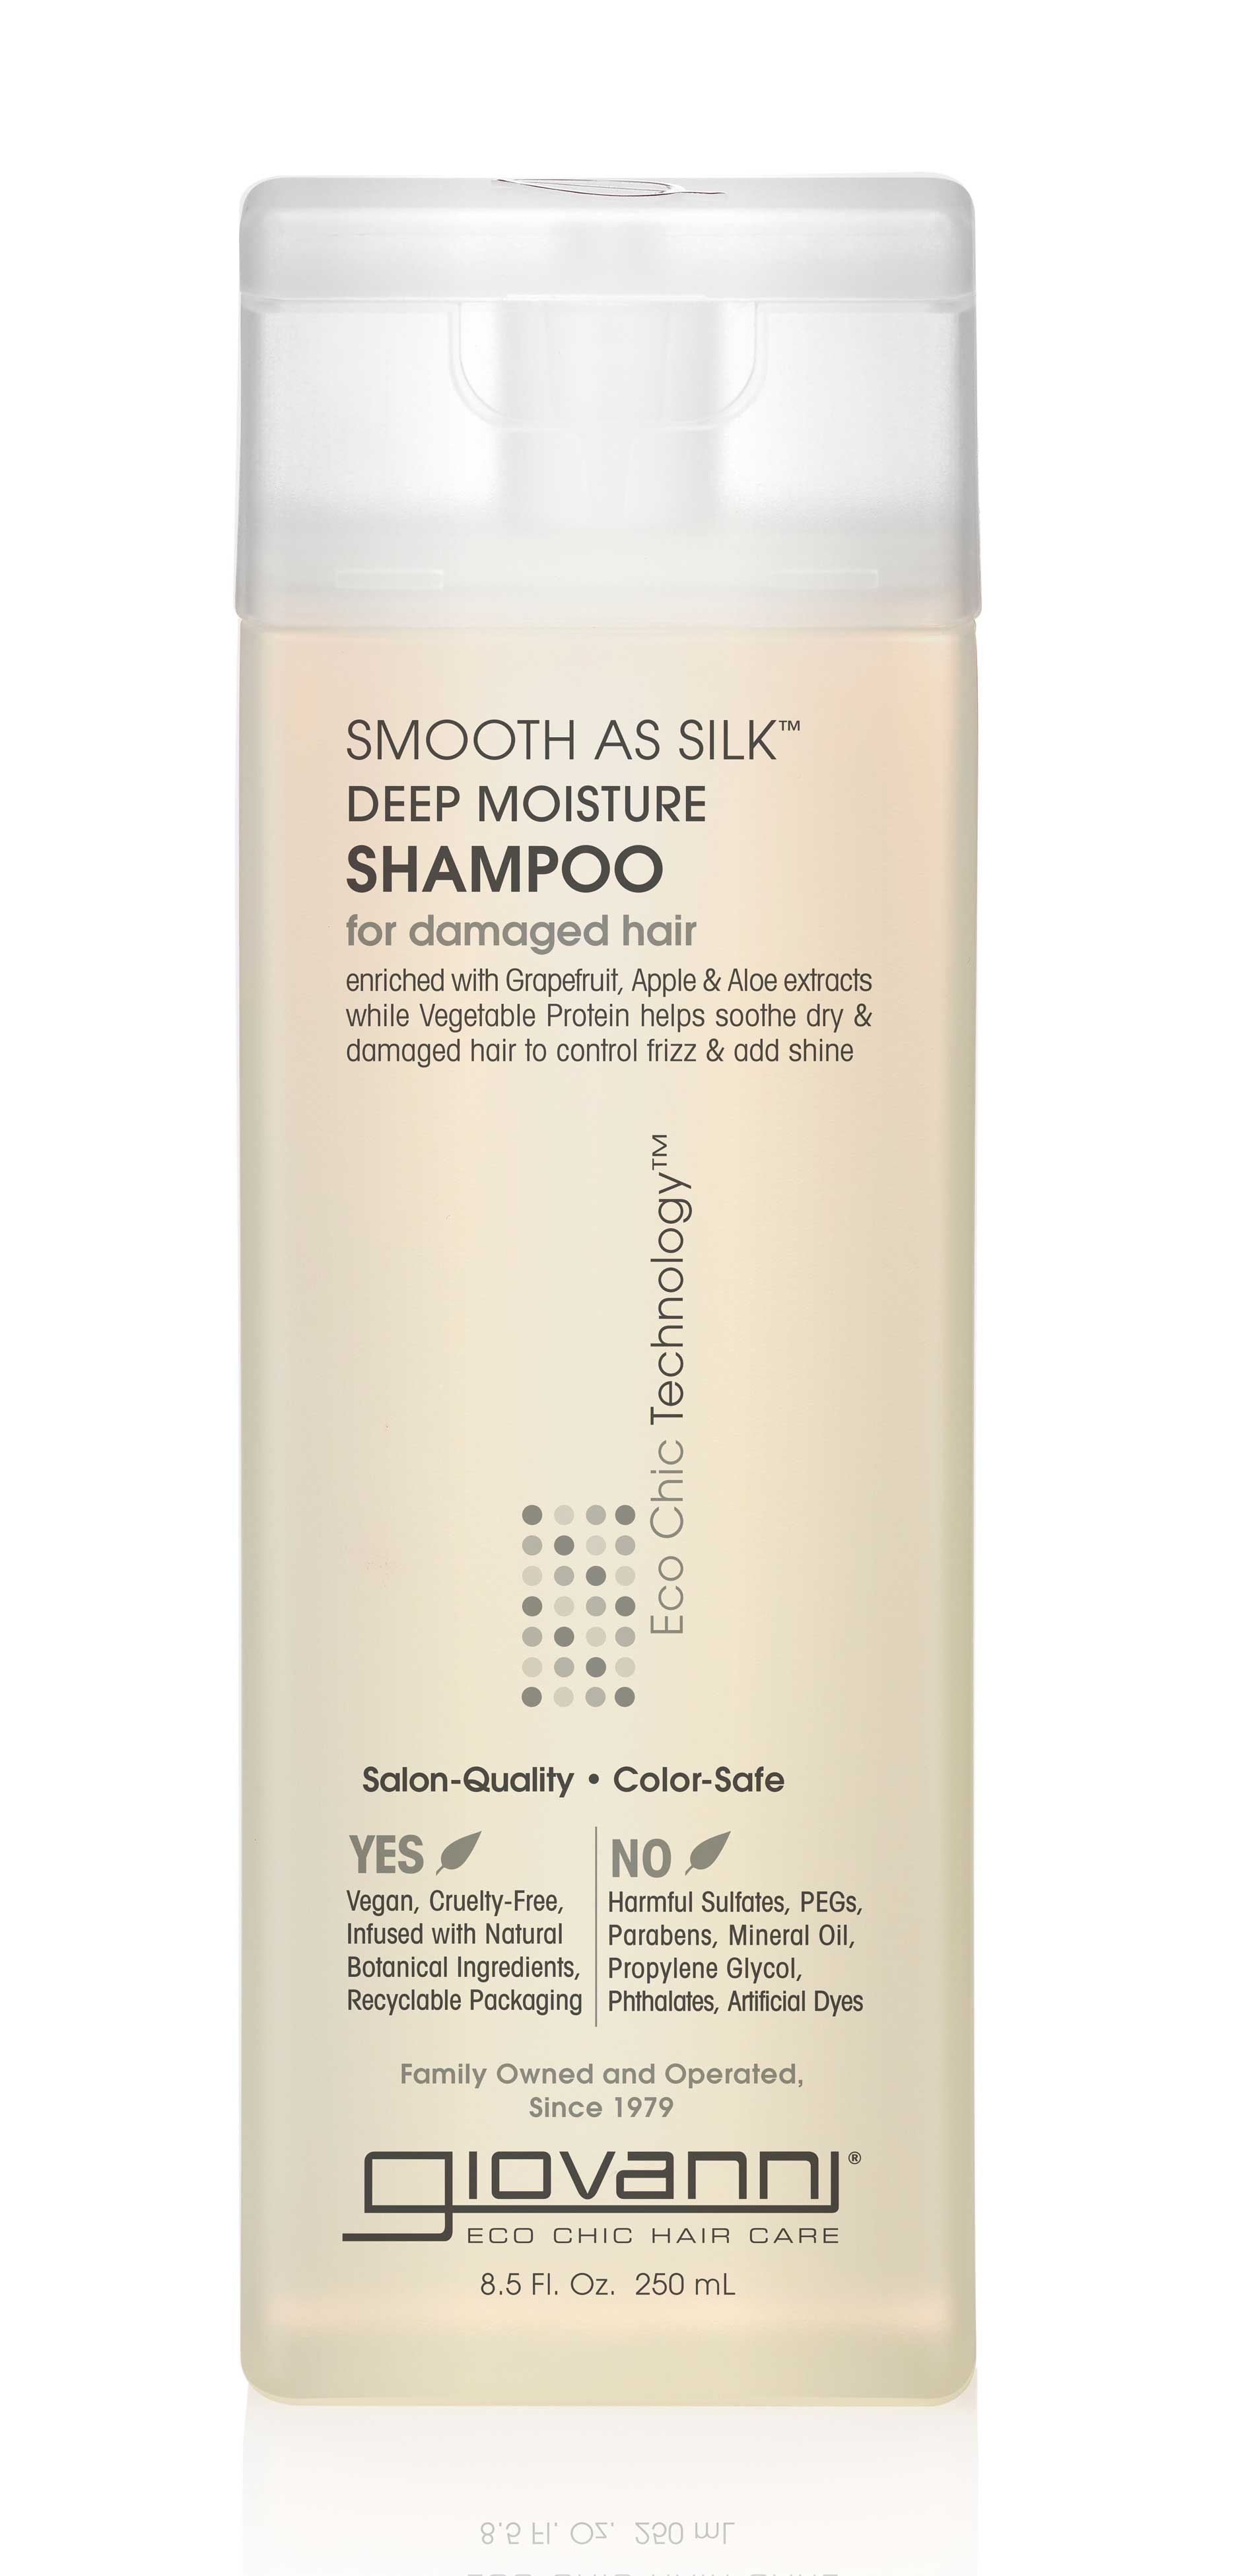 Giovanni Smooth As Silk Shampoo 250ml